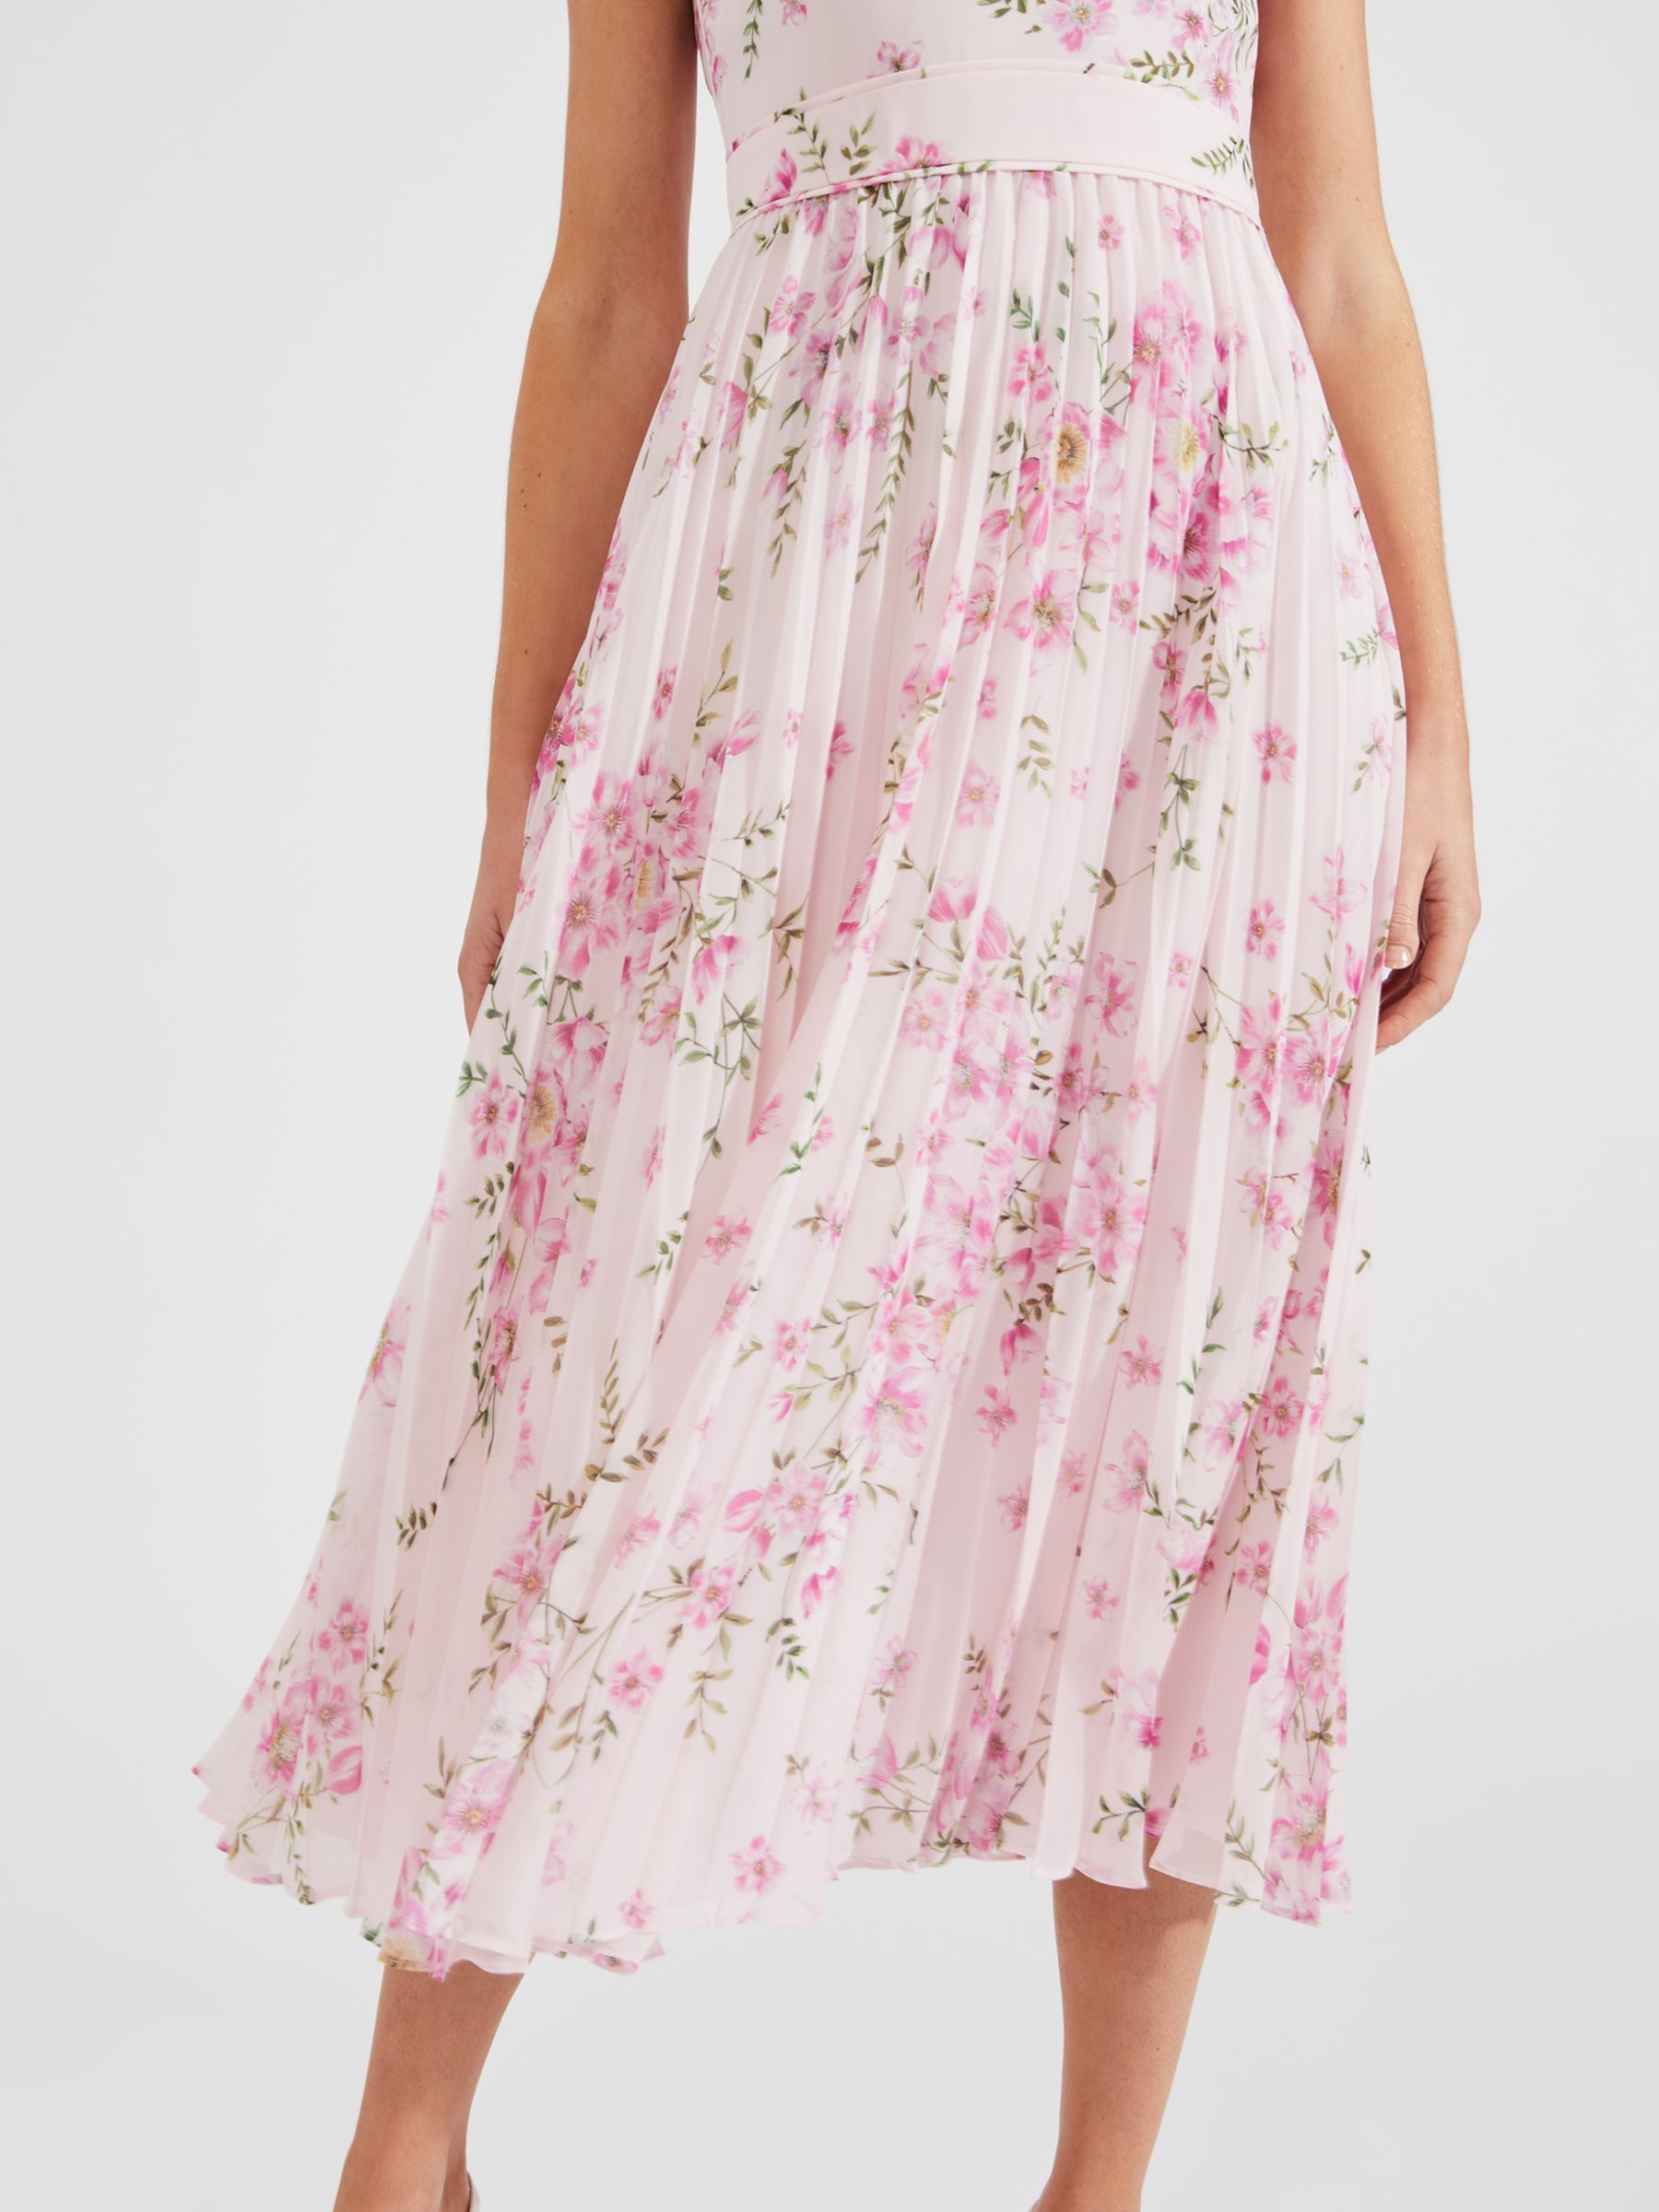 Hobbs Veronica Floral Print Pleated Maxi Dress, Pink/Multi, 8